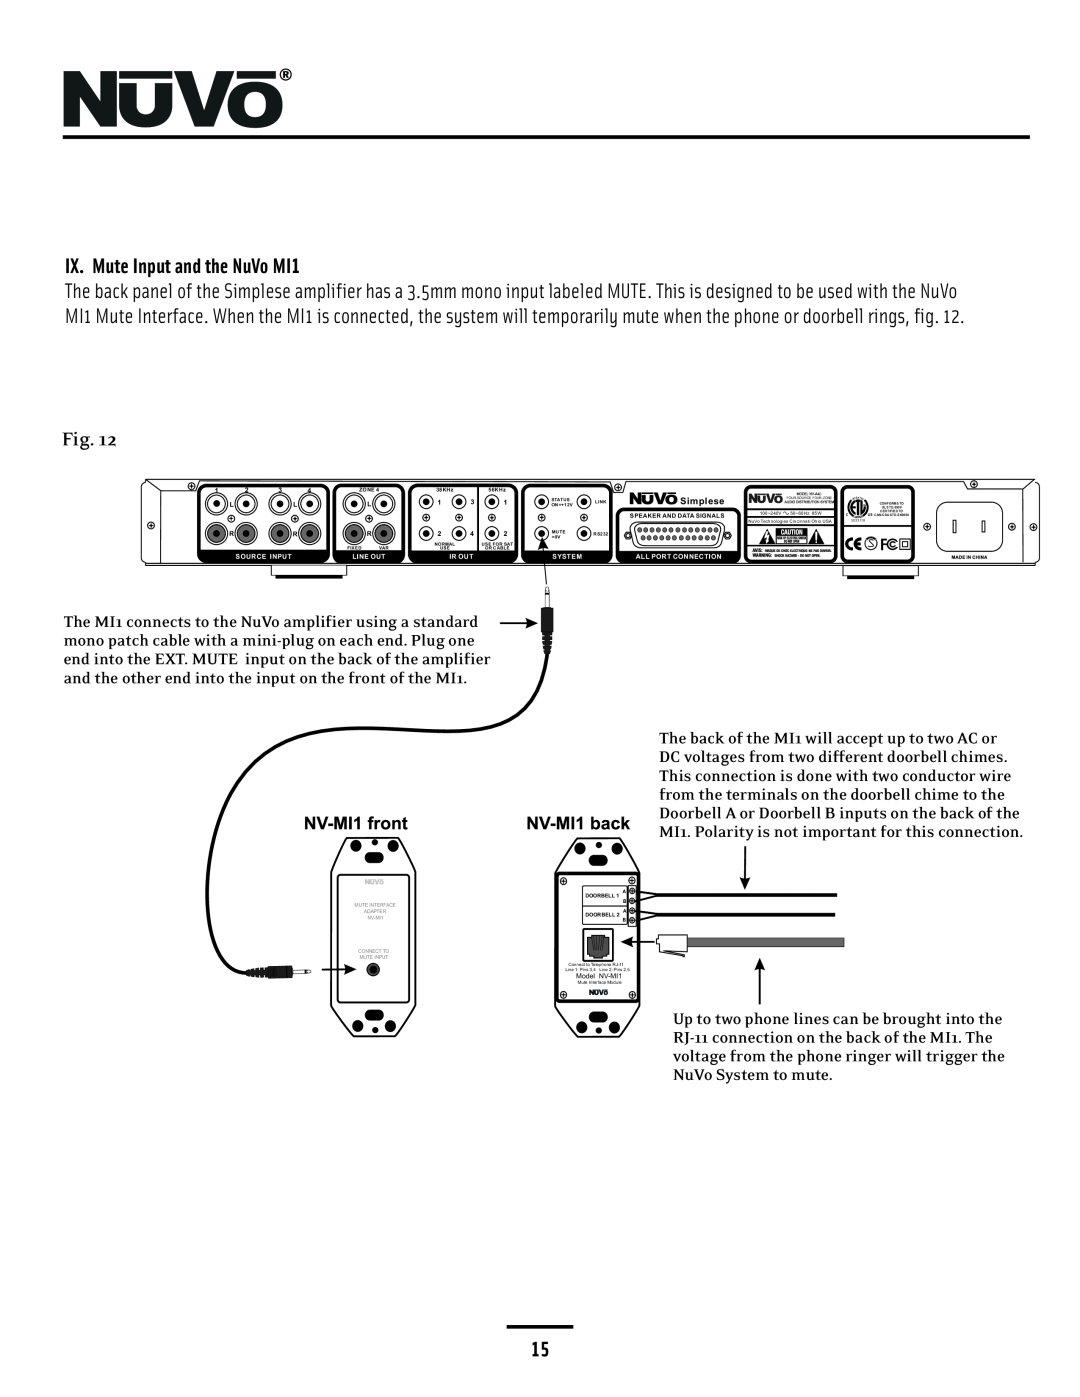 Nuvo NV-A4DS-UK installation manual IX. Mute Input and the NuVo MI1, Model NV-MI1 